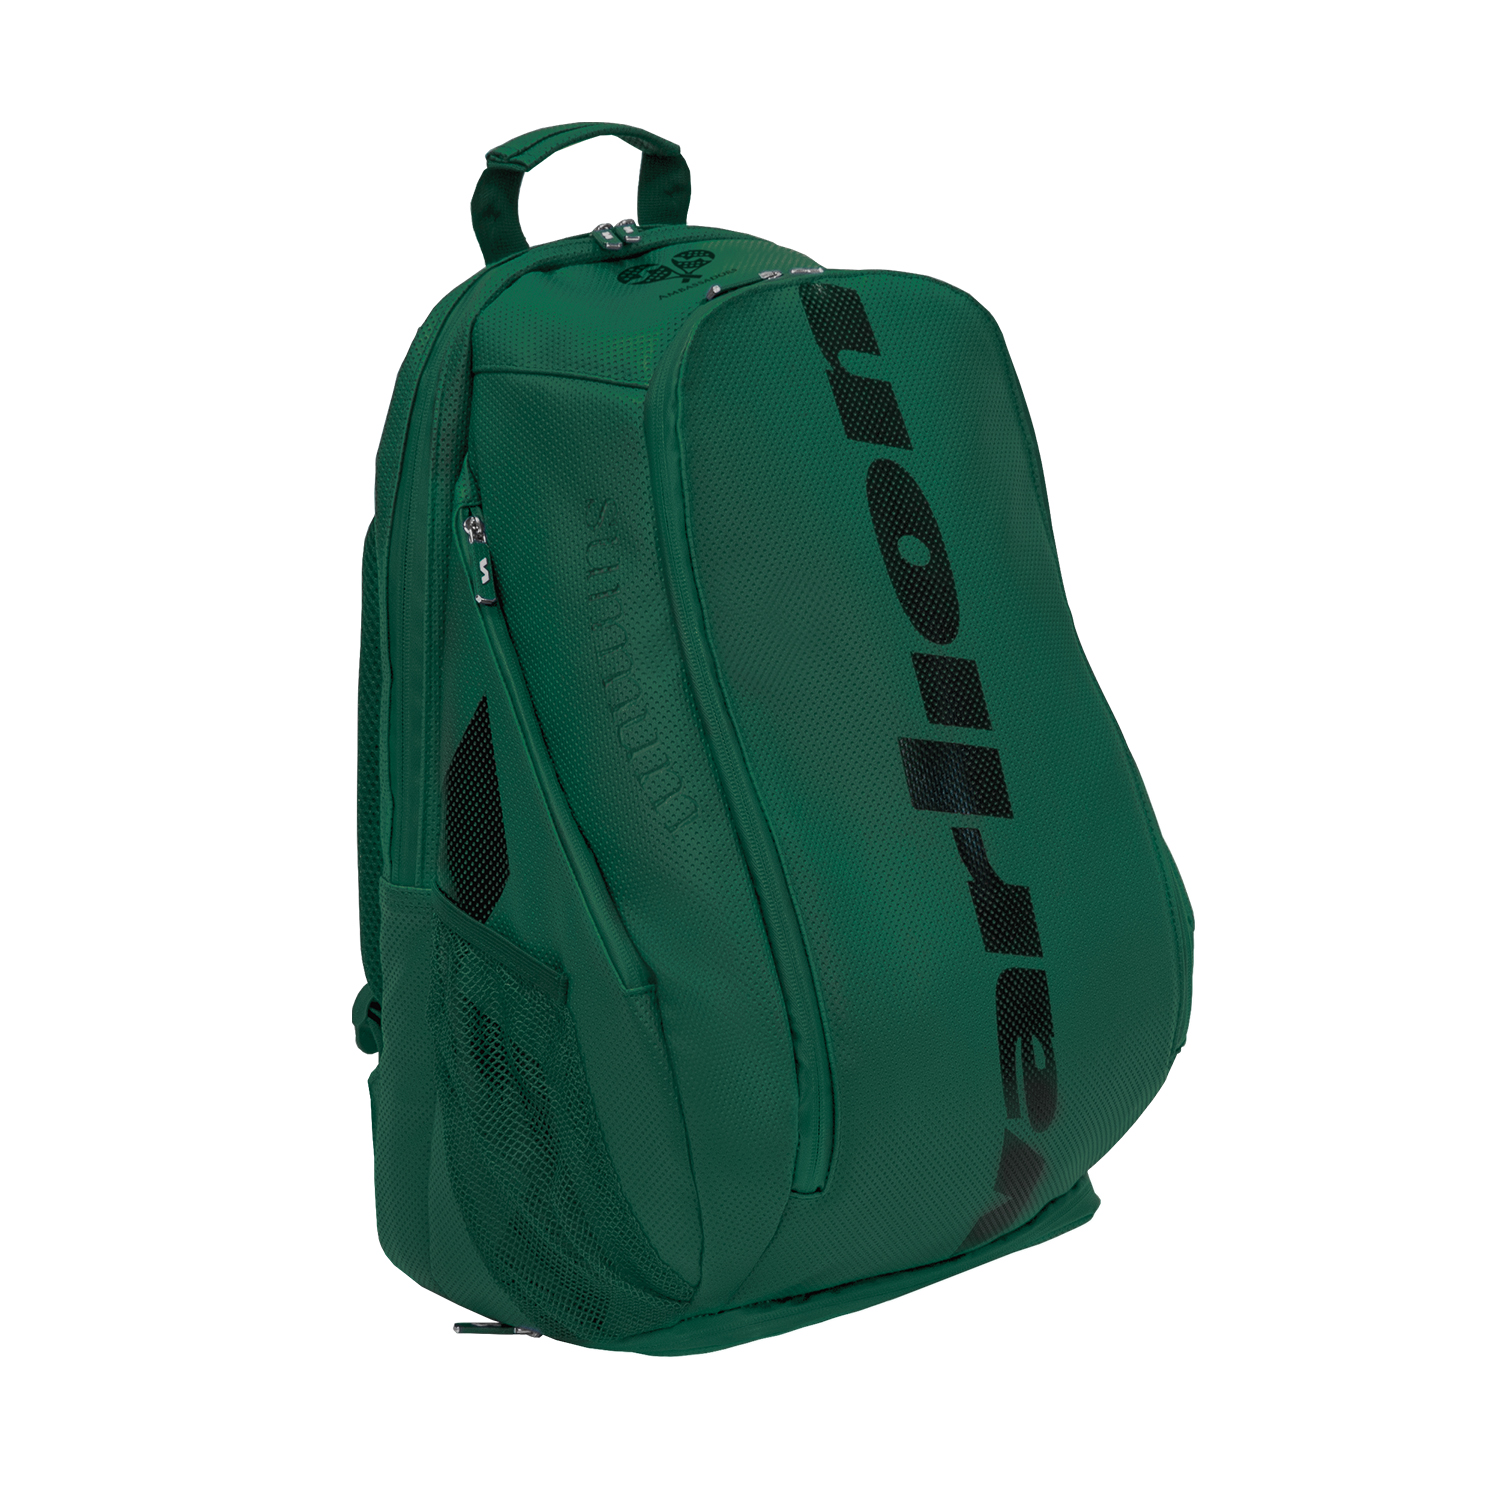 Varlion Ambassadors Backpack - Dark Green